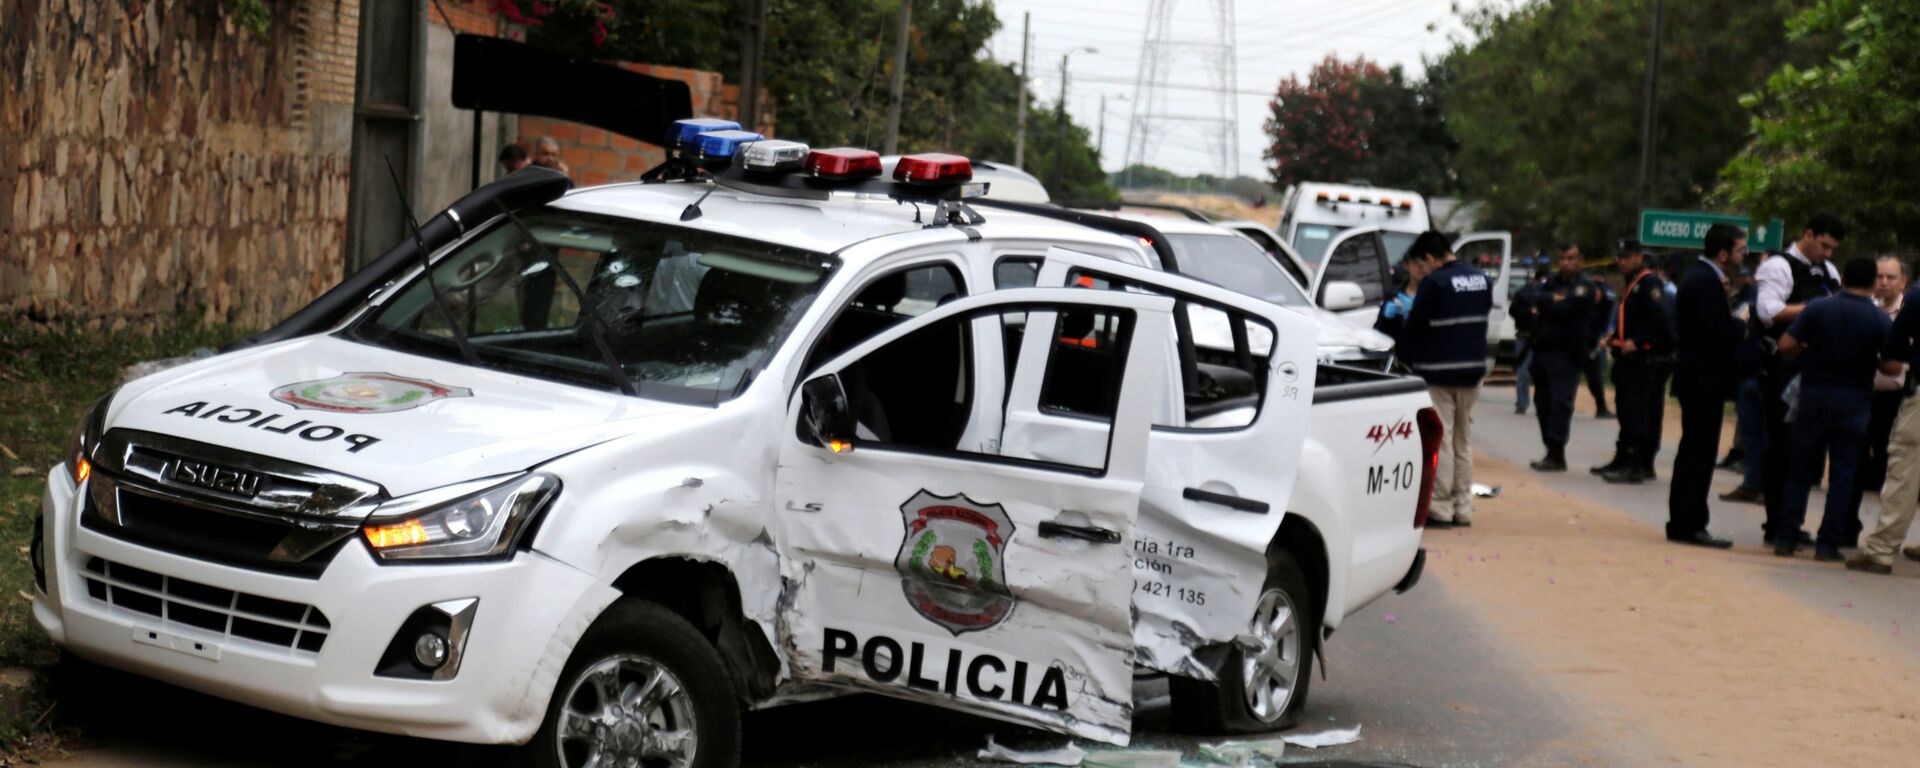 Camioneta policial destrozada tras el ataque de un grupo criminal para liberar al líder narco Teófilo Samudio - Sputnik Mundo, 1920, 12.09.2019